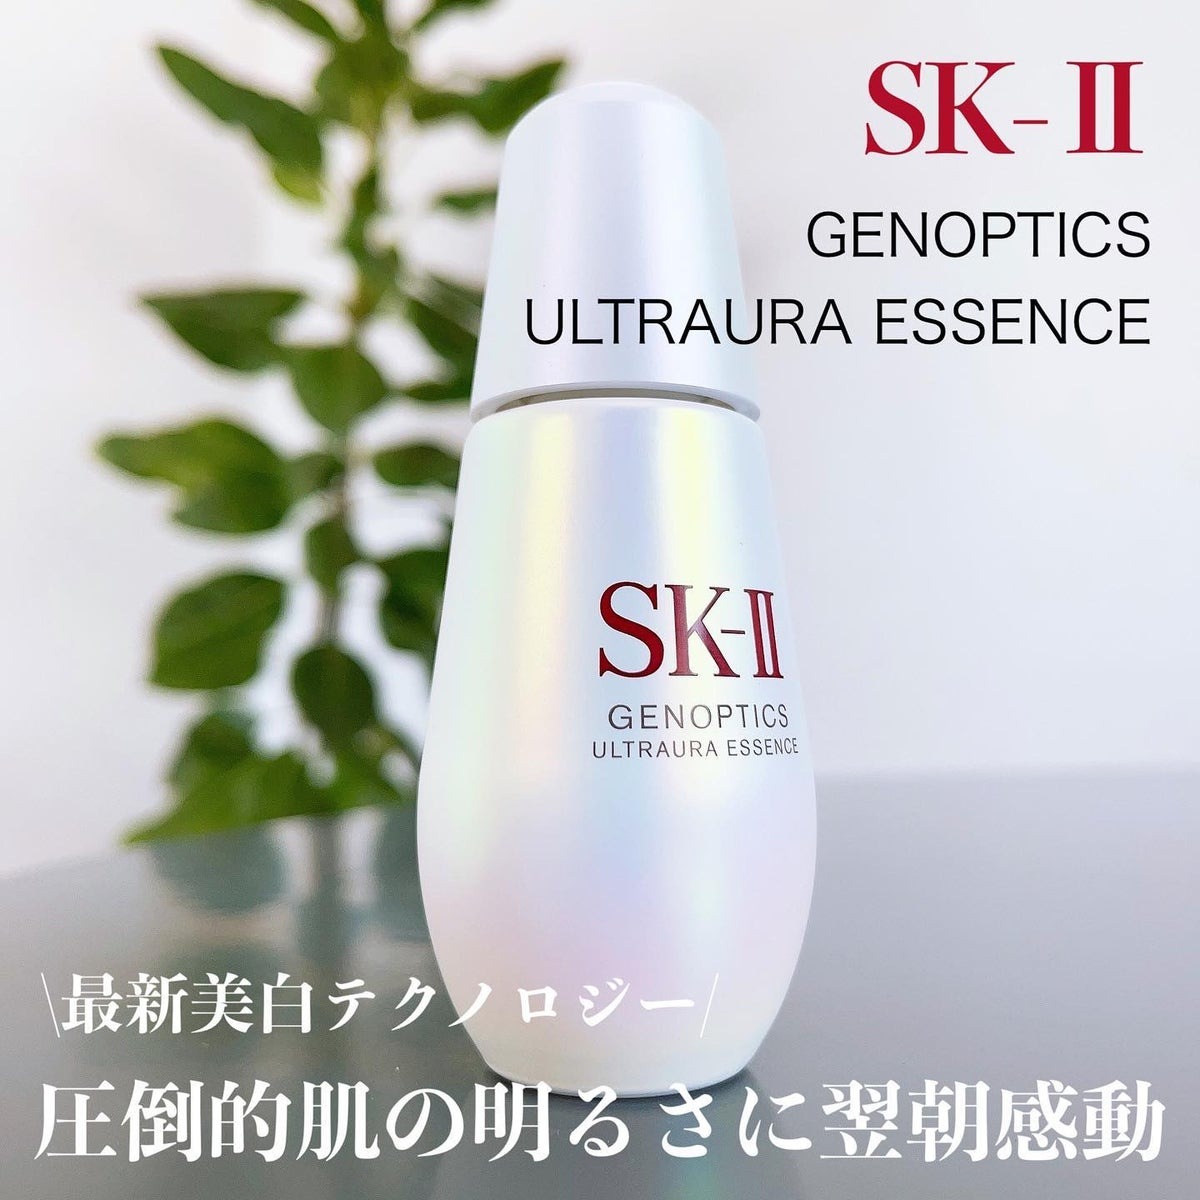 review sk ii genoptics ultraura essence